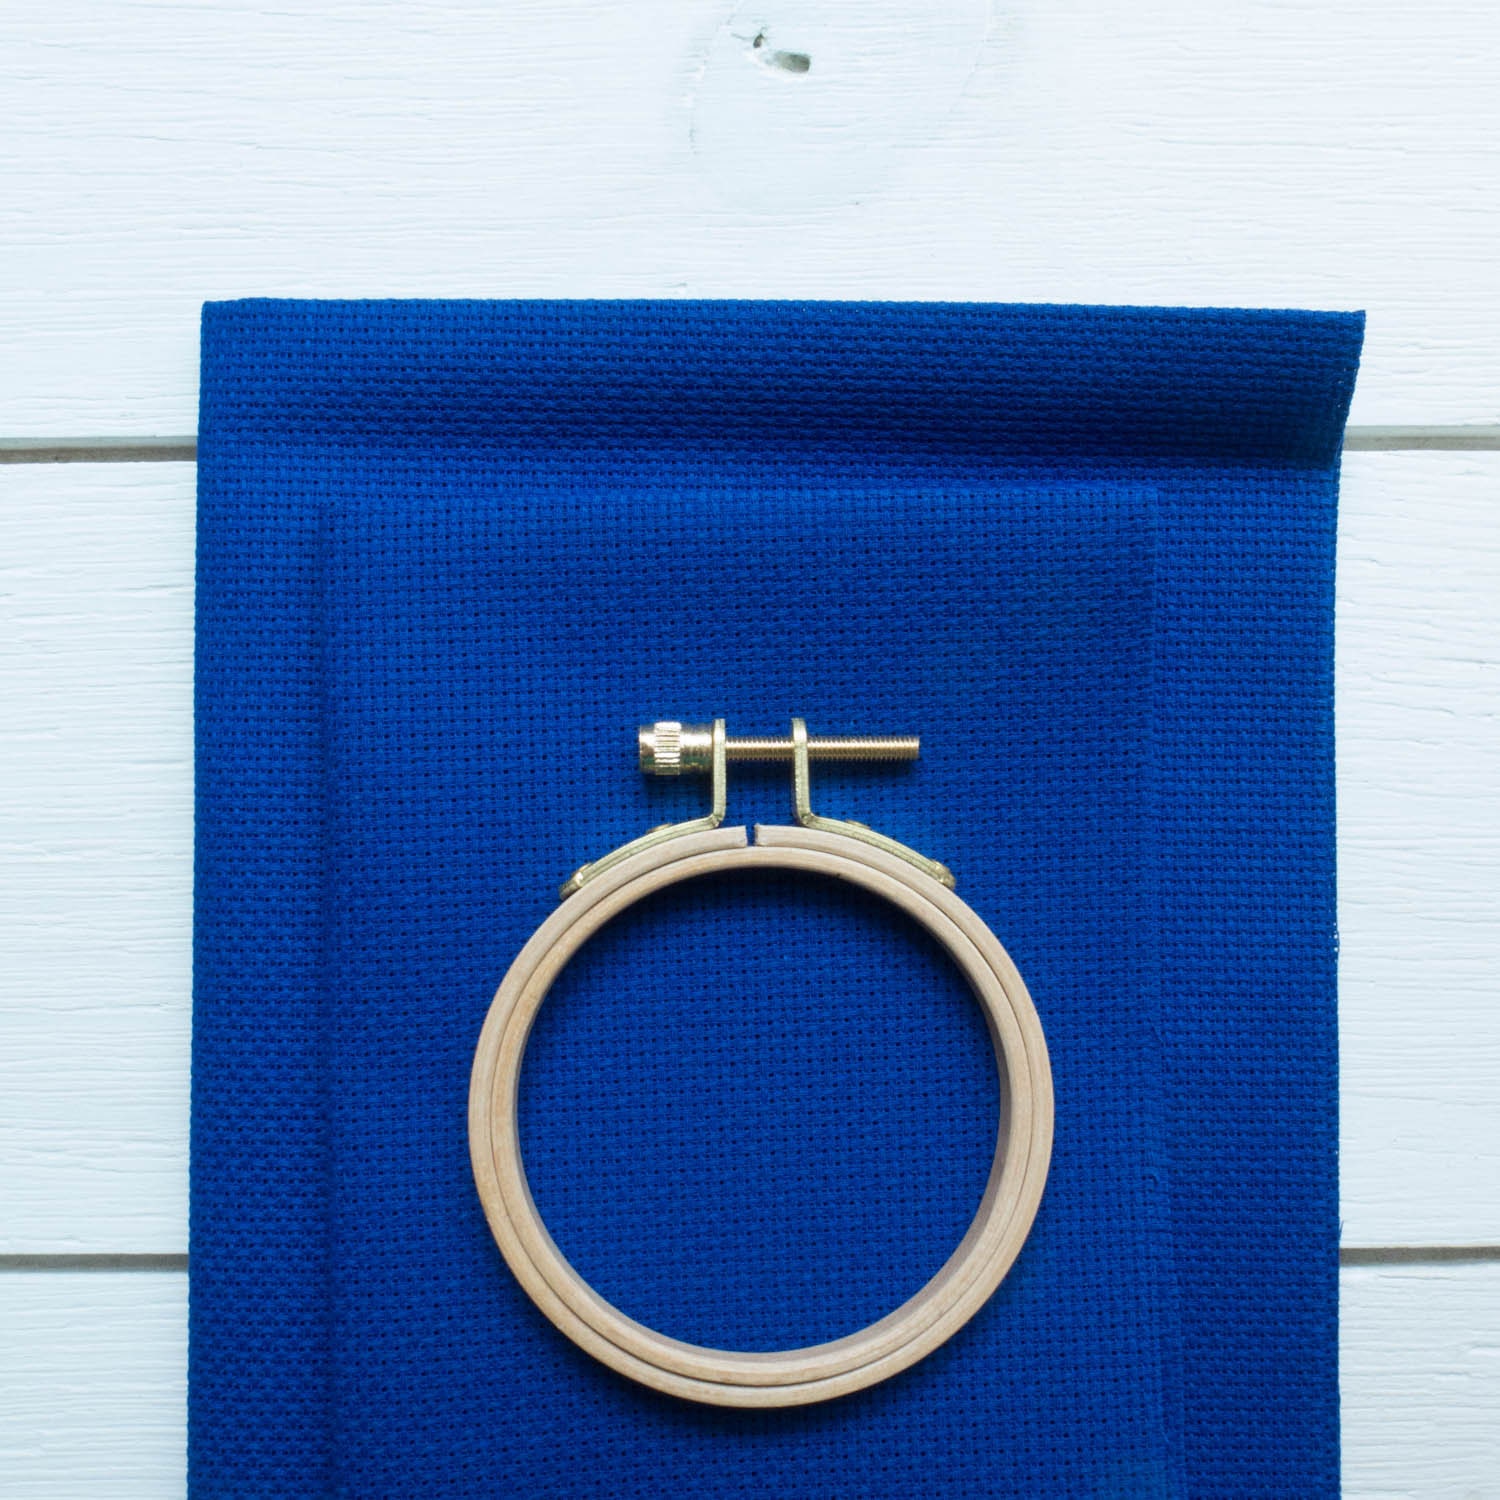 14 Count Cross Stitch Fabric Embroidery Aida Cloth Royal Blue 